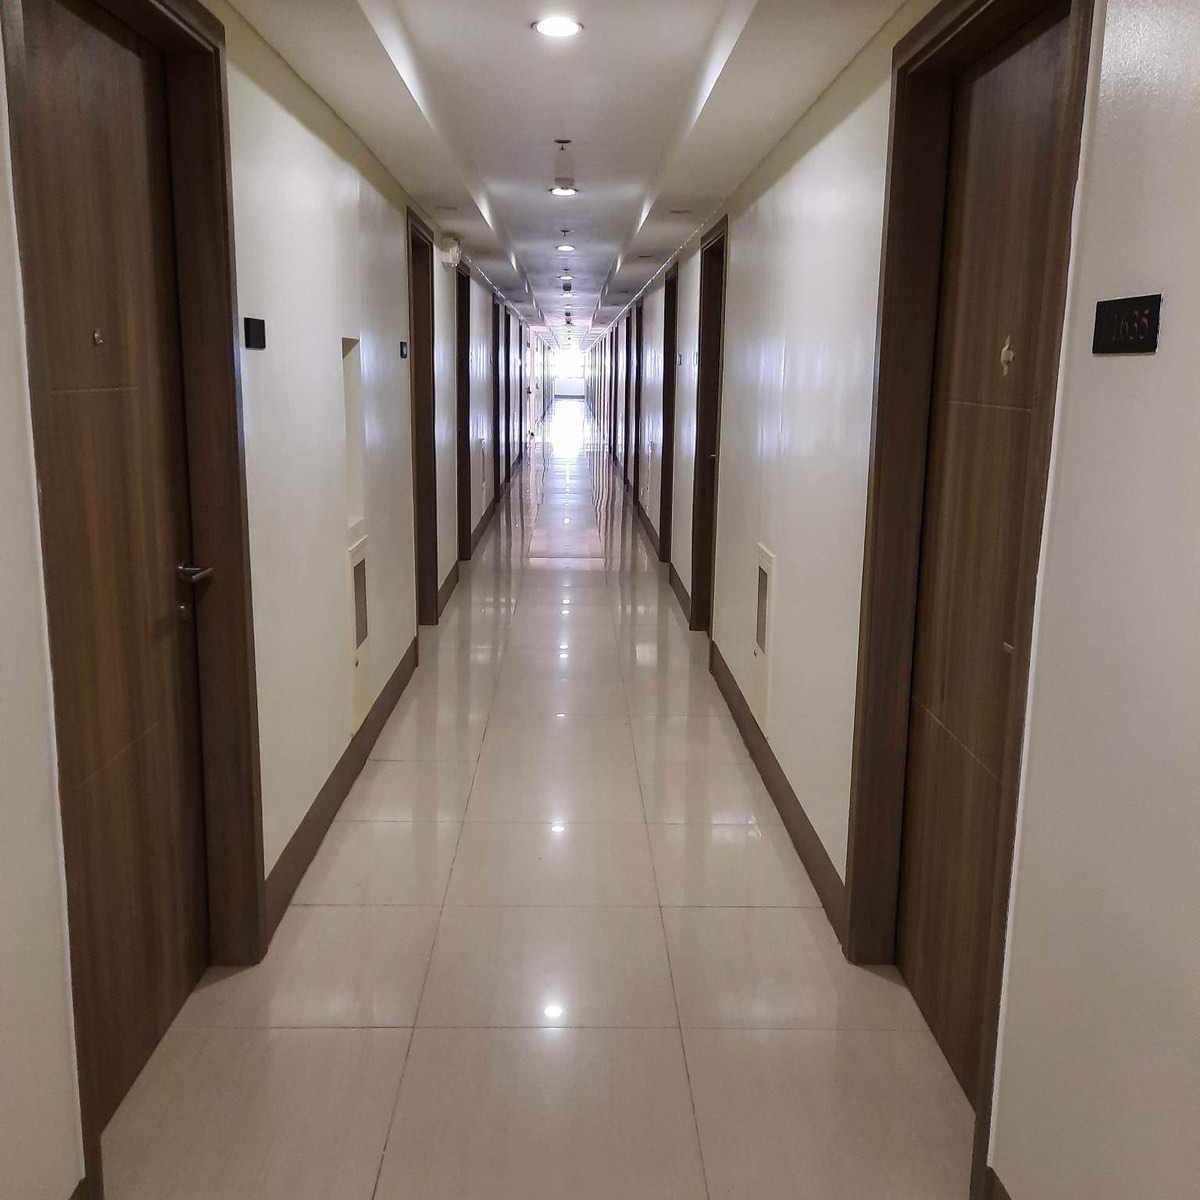 24.05 sqm 1-bedroom Condo for Sale in Mandaluyong Metro Manila